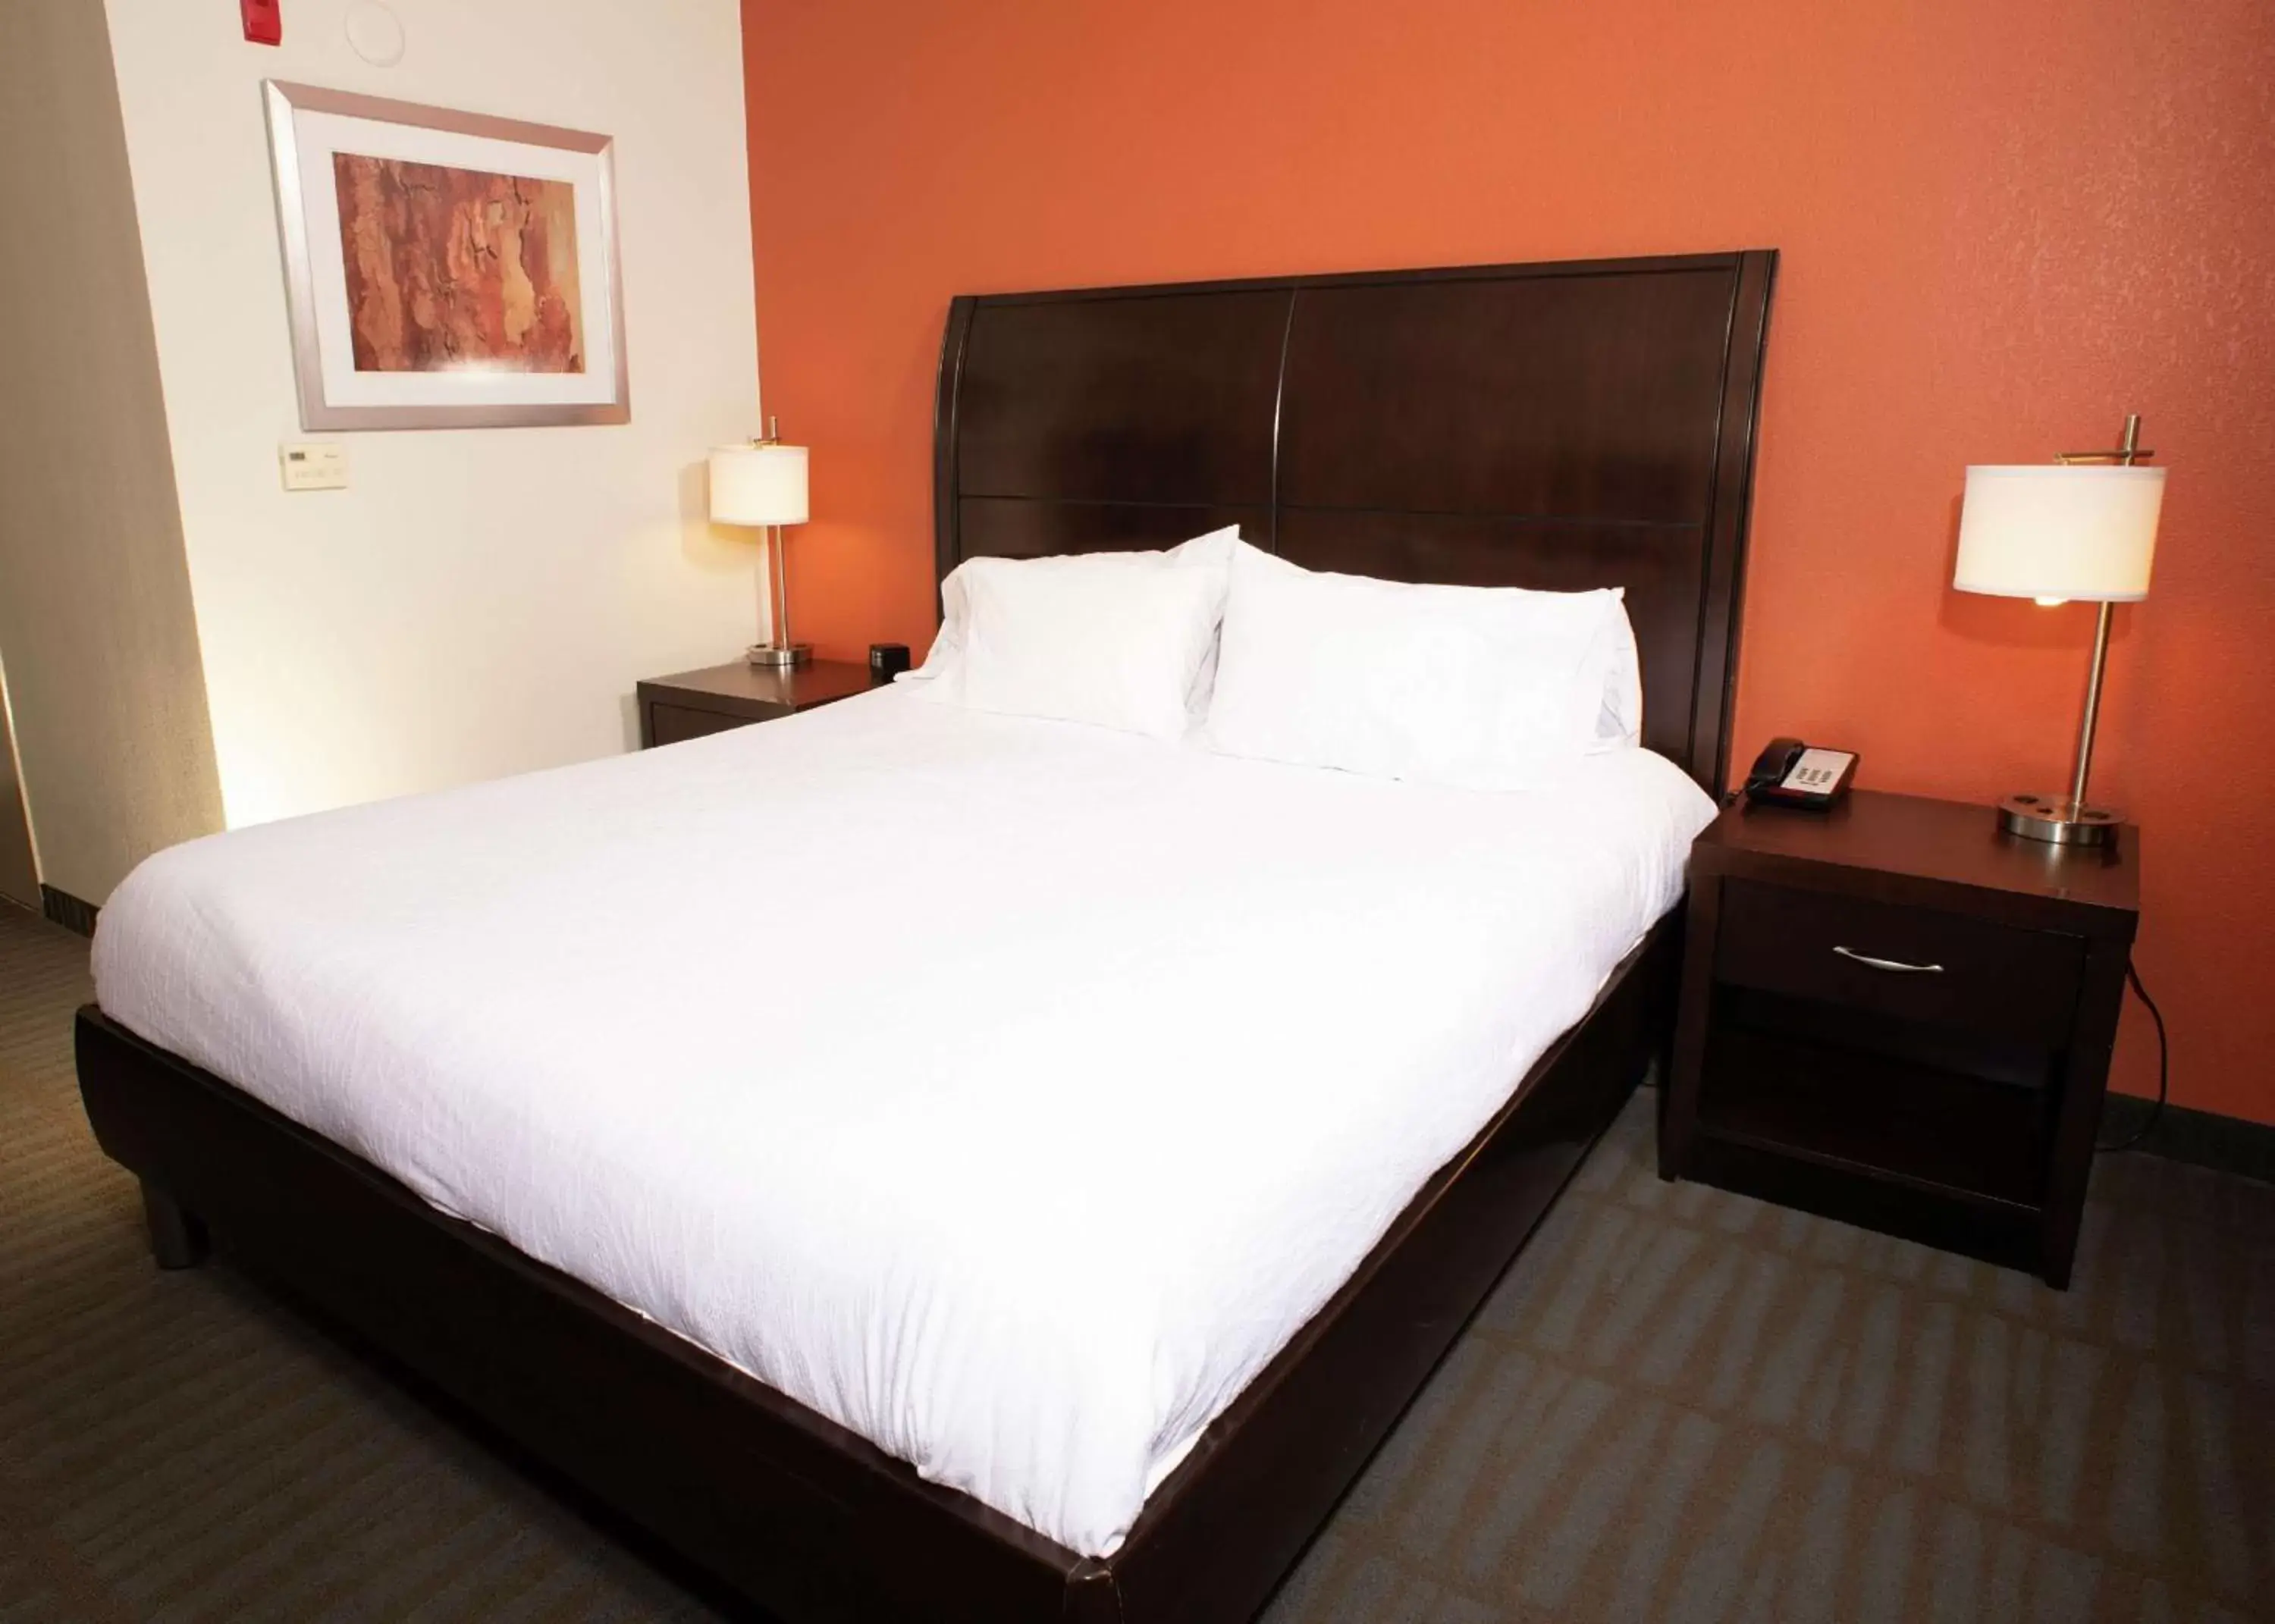 Bed in Hilton Garden Inn Springfield, IL